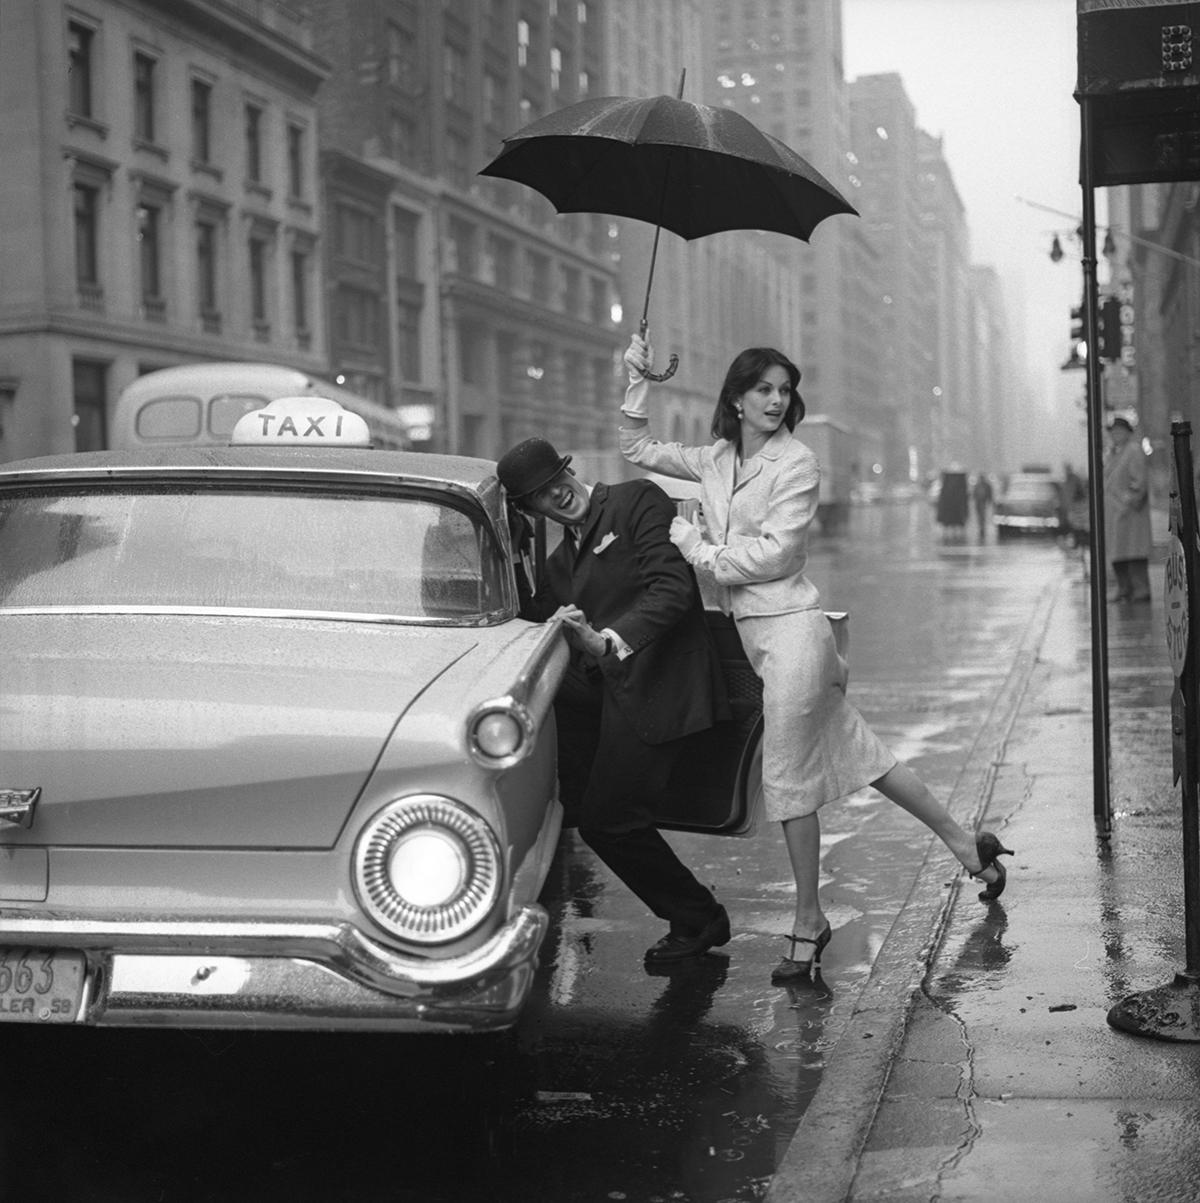 Anne St. Marie, Pushing Man in Cab, 1958 - Jerry Schatzberg